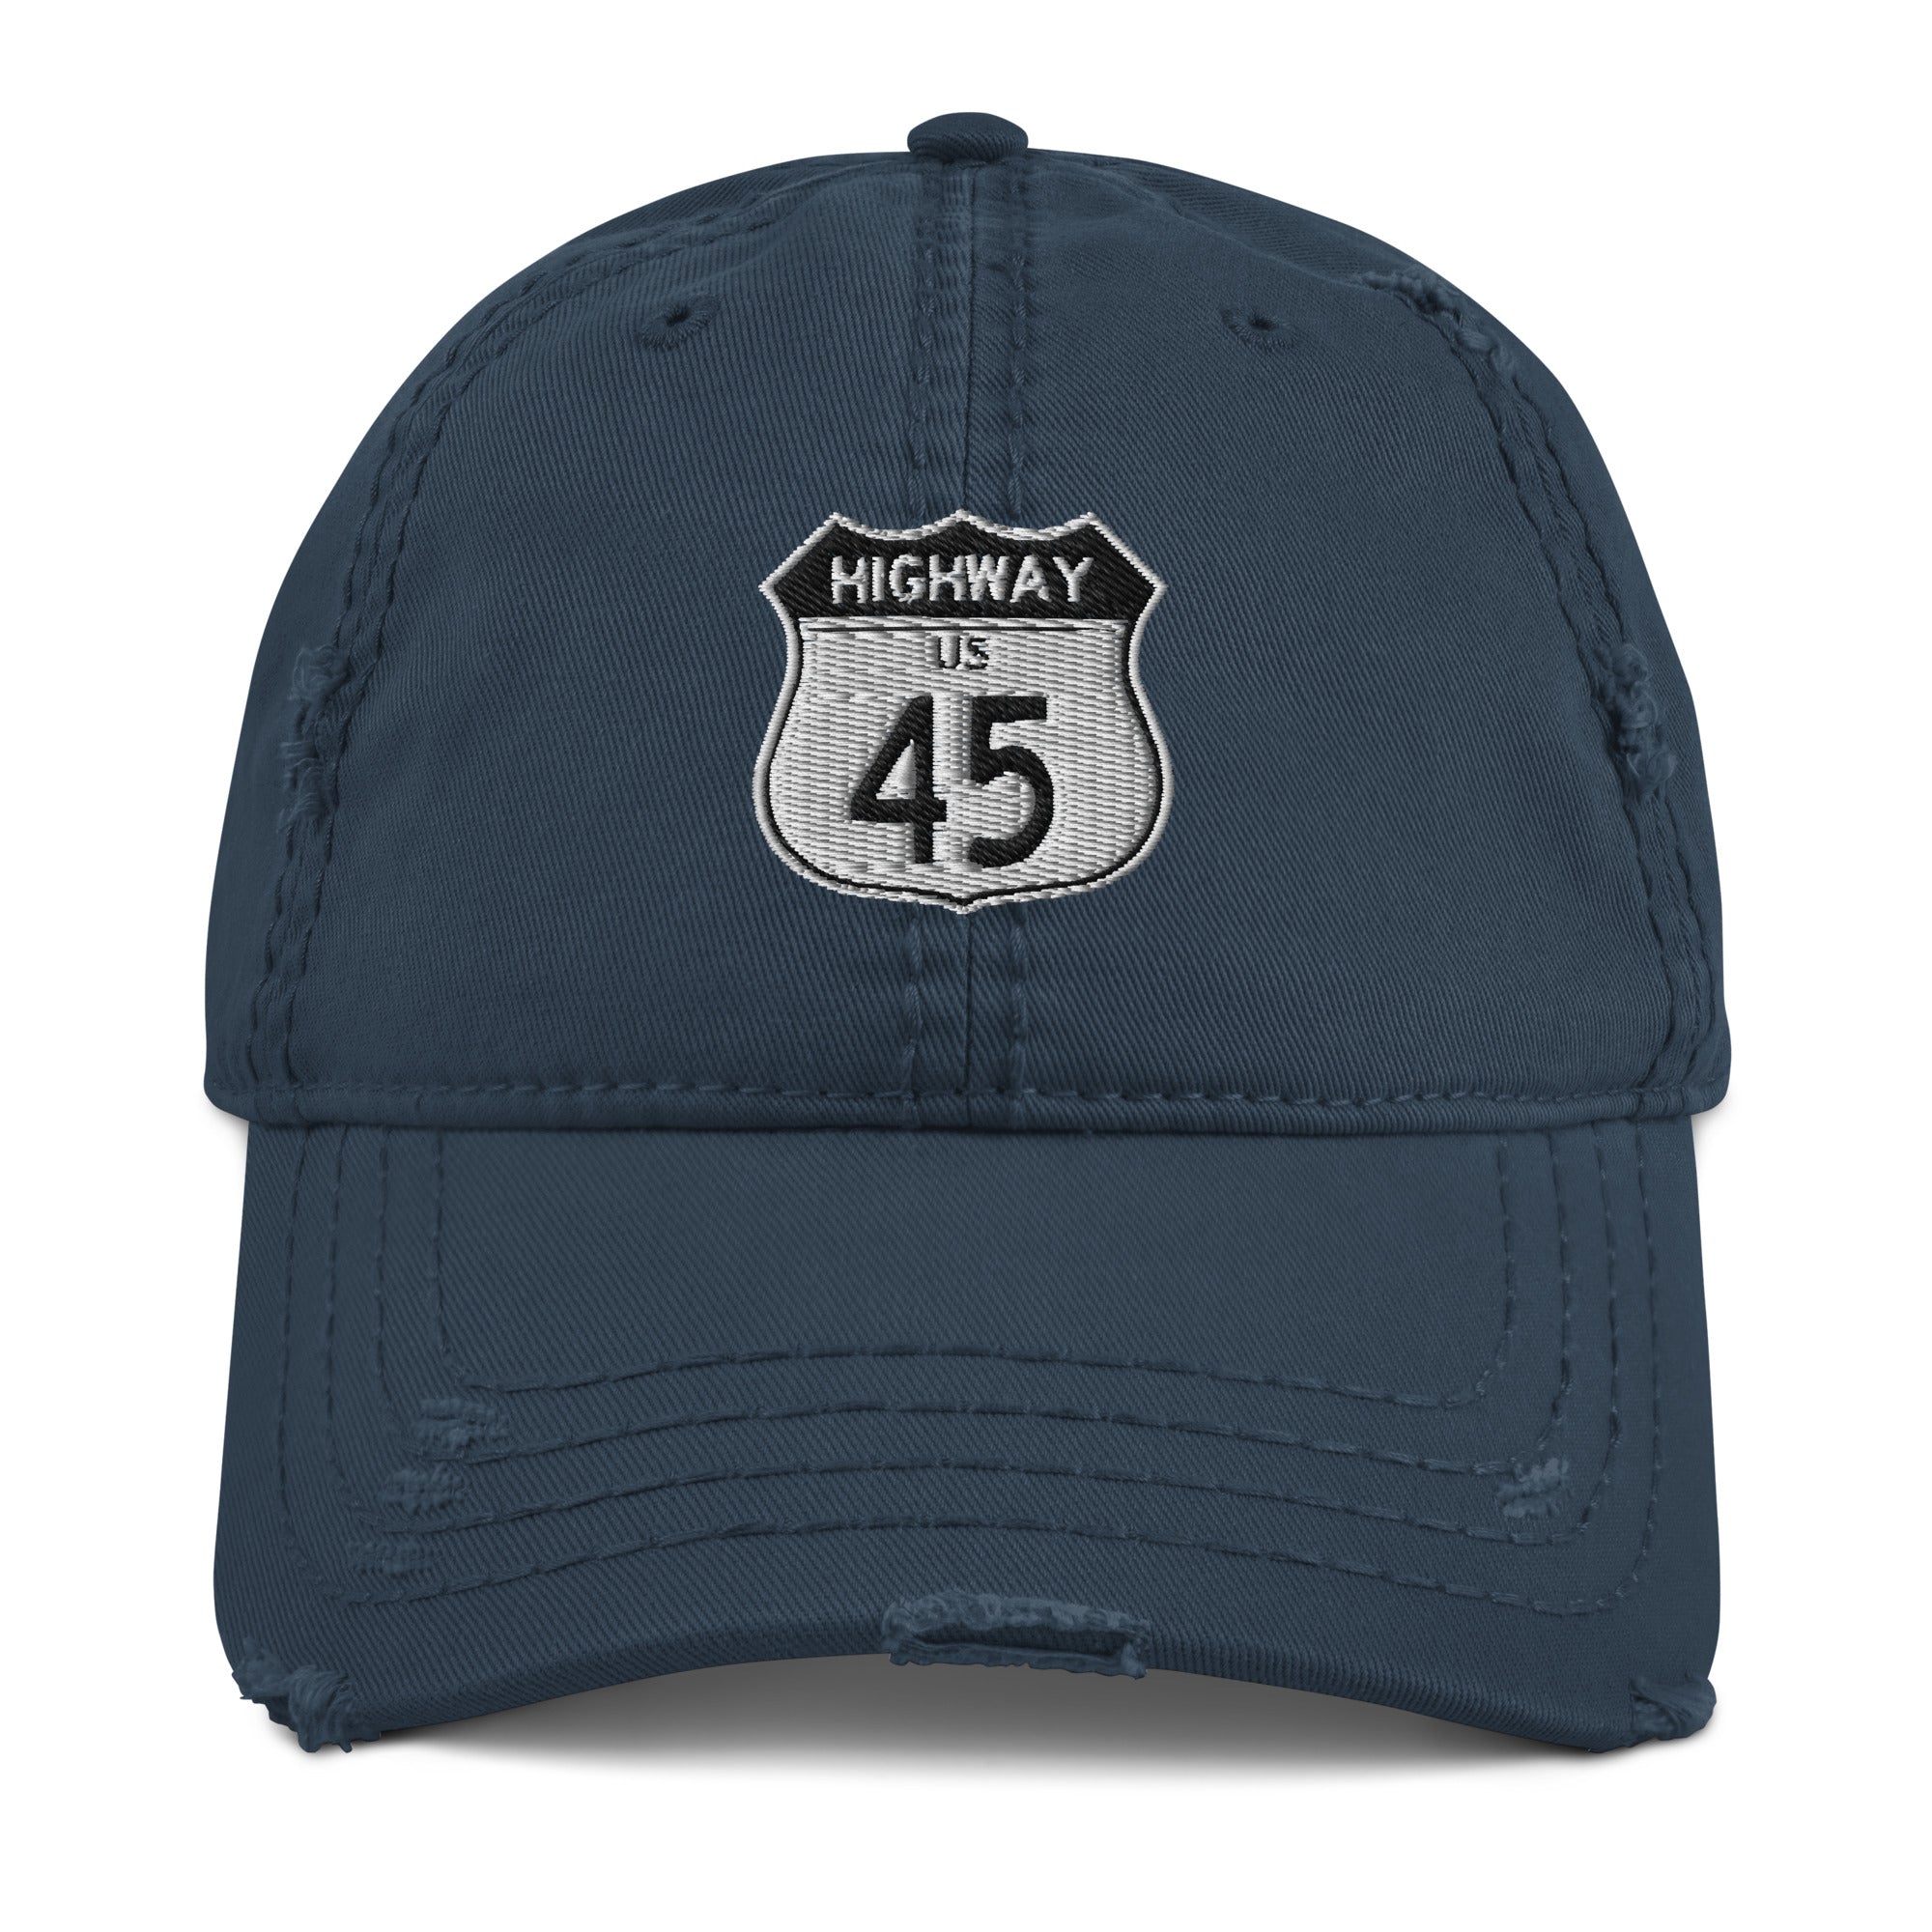 Highway 45 Distressed Dad Hat